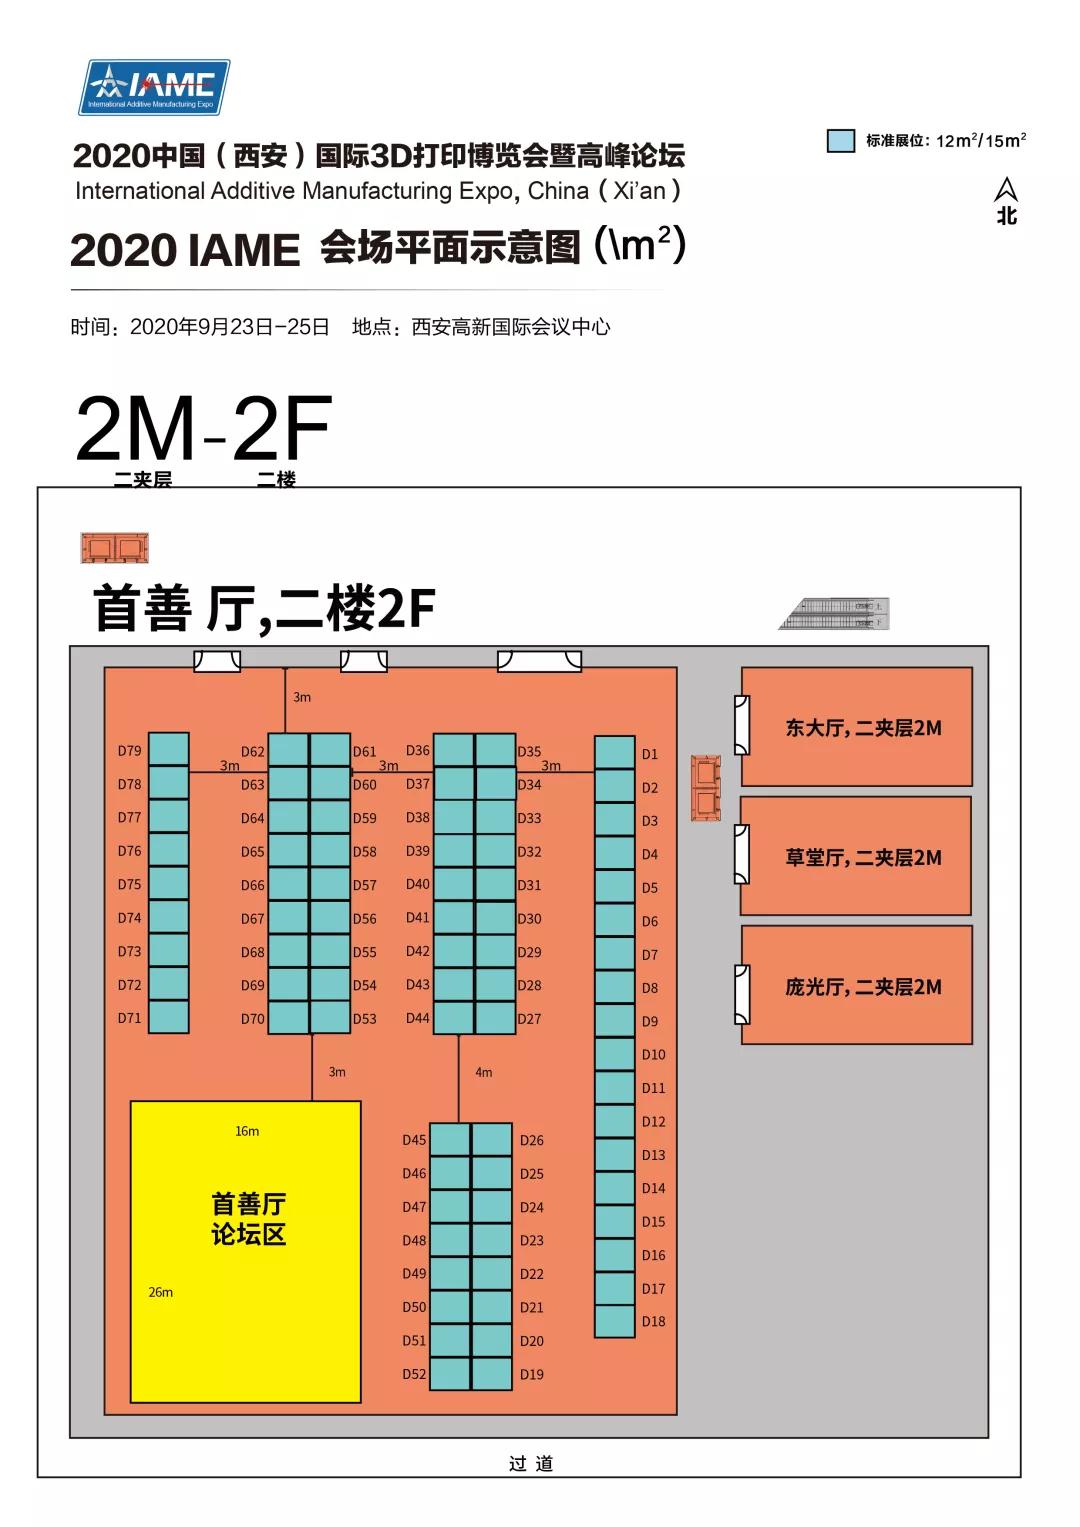 2020IAME-中国（西安）国际3D打印博览会暨高峰论坛邀您参加